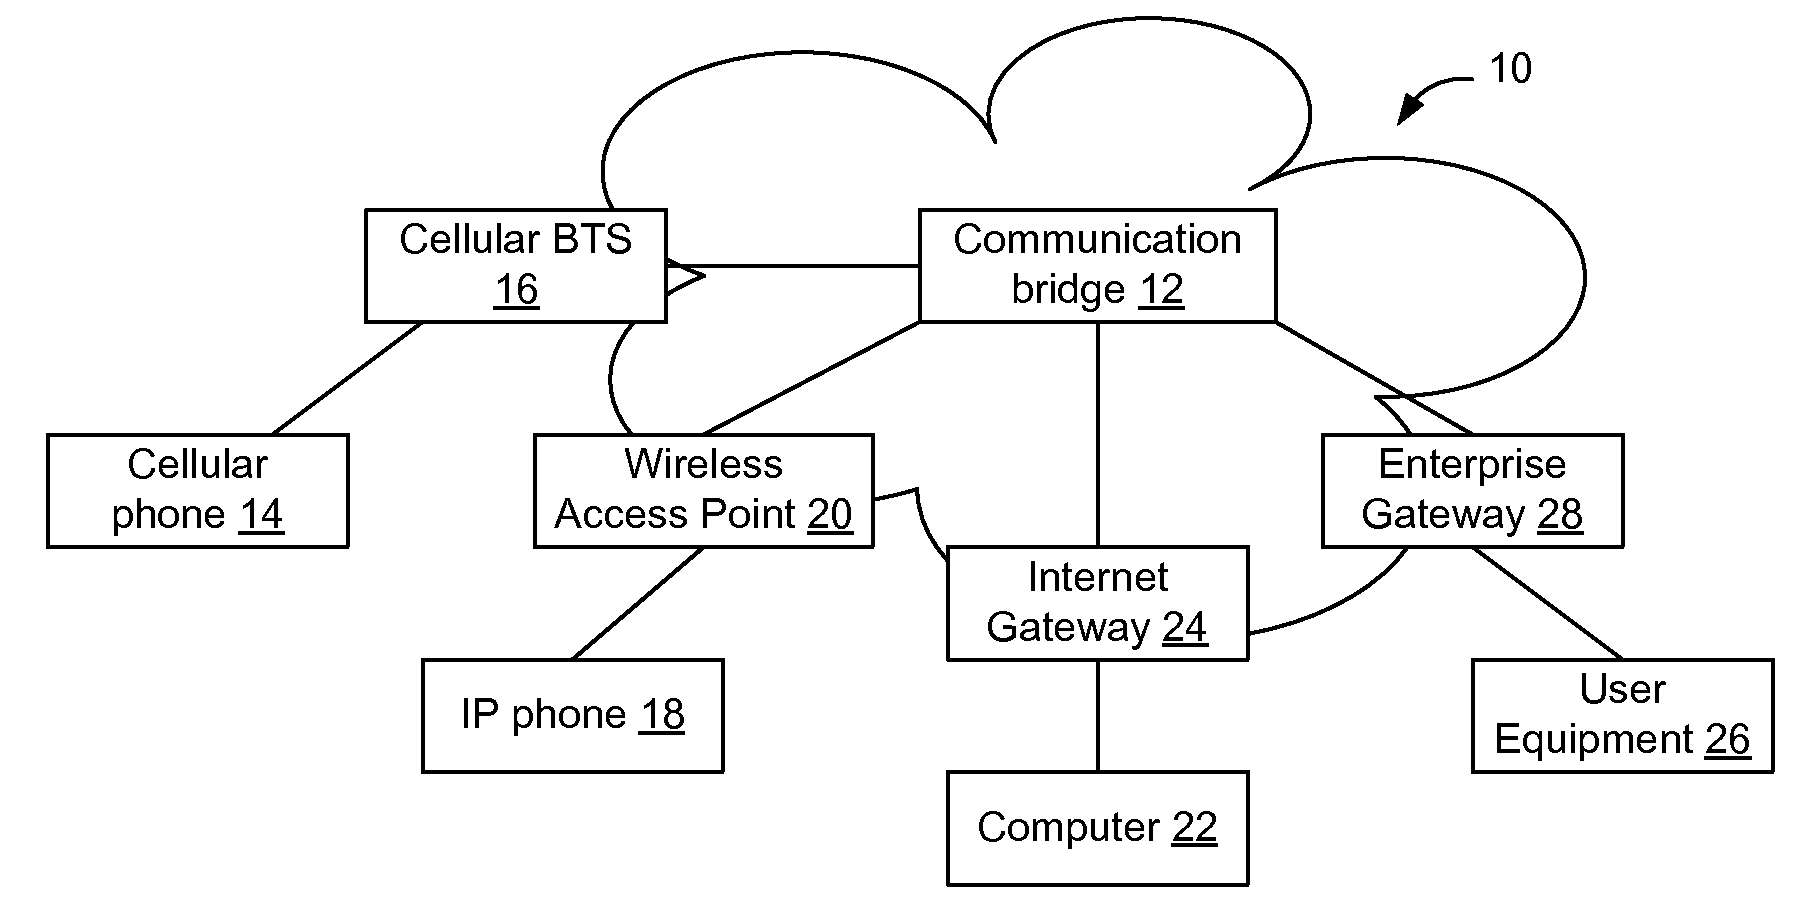 Enhanced communication bridge